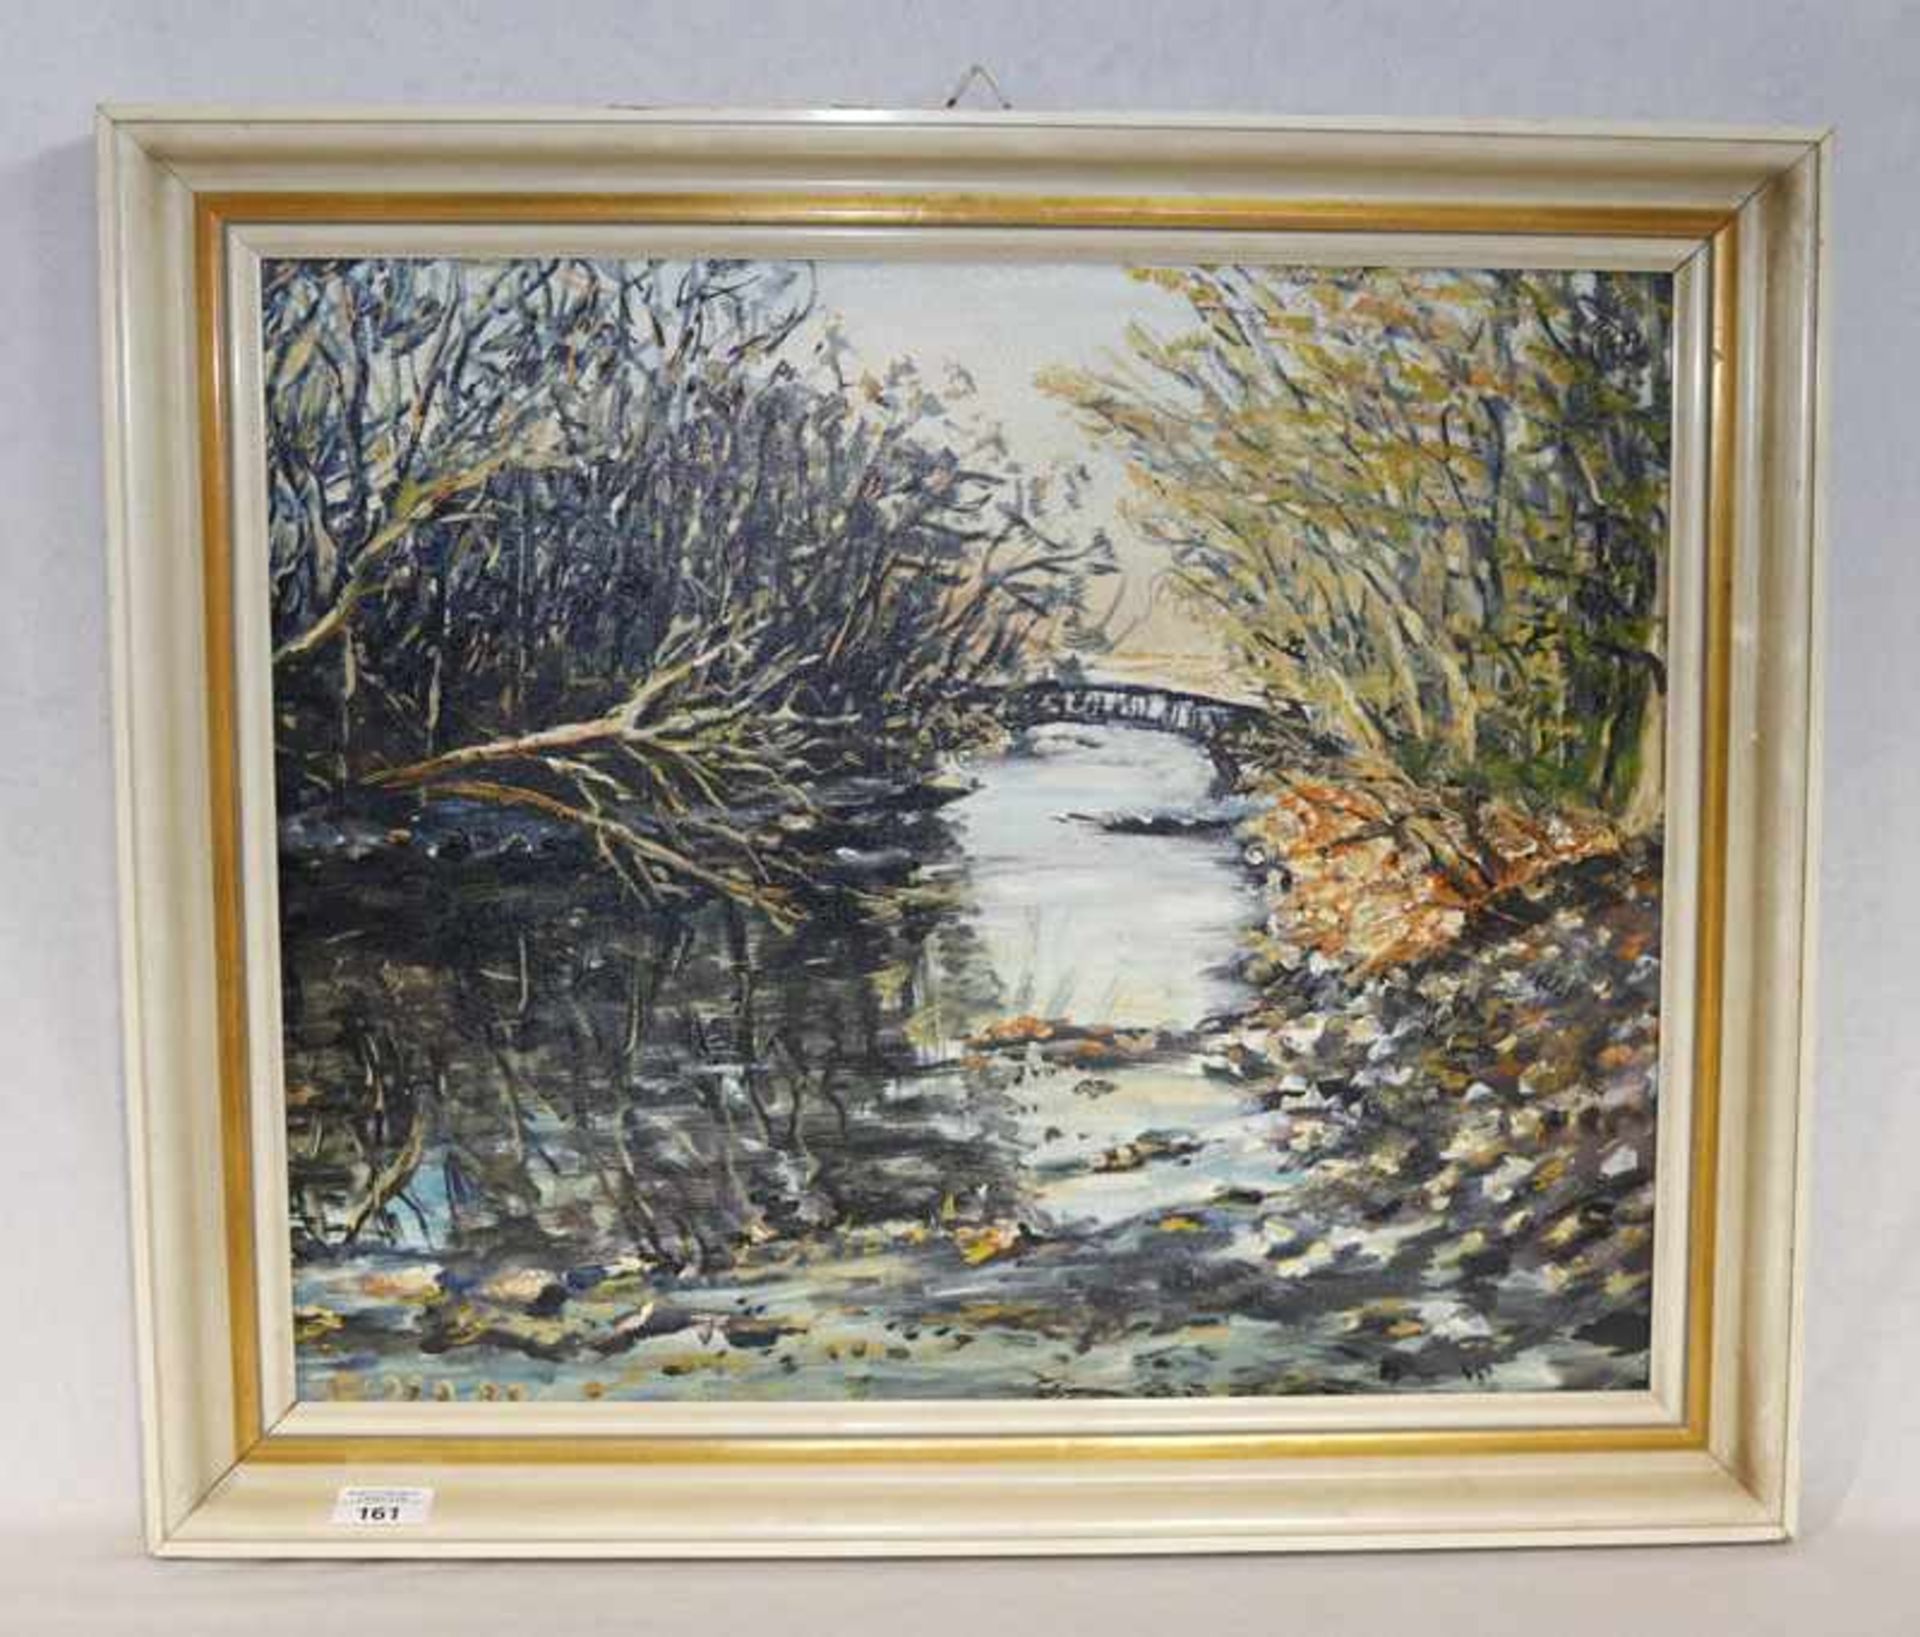 Gemälde ÖL/LW 'Flußlauf mit Brücke', gerahmt, Rahmen bestossen, incl. Rahmen57 cm x 66 cm